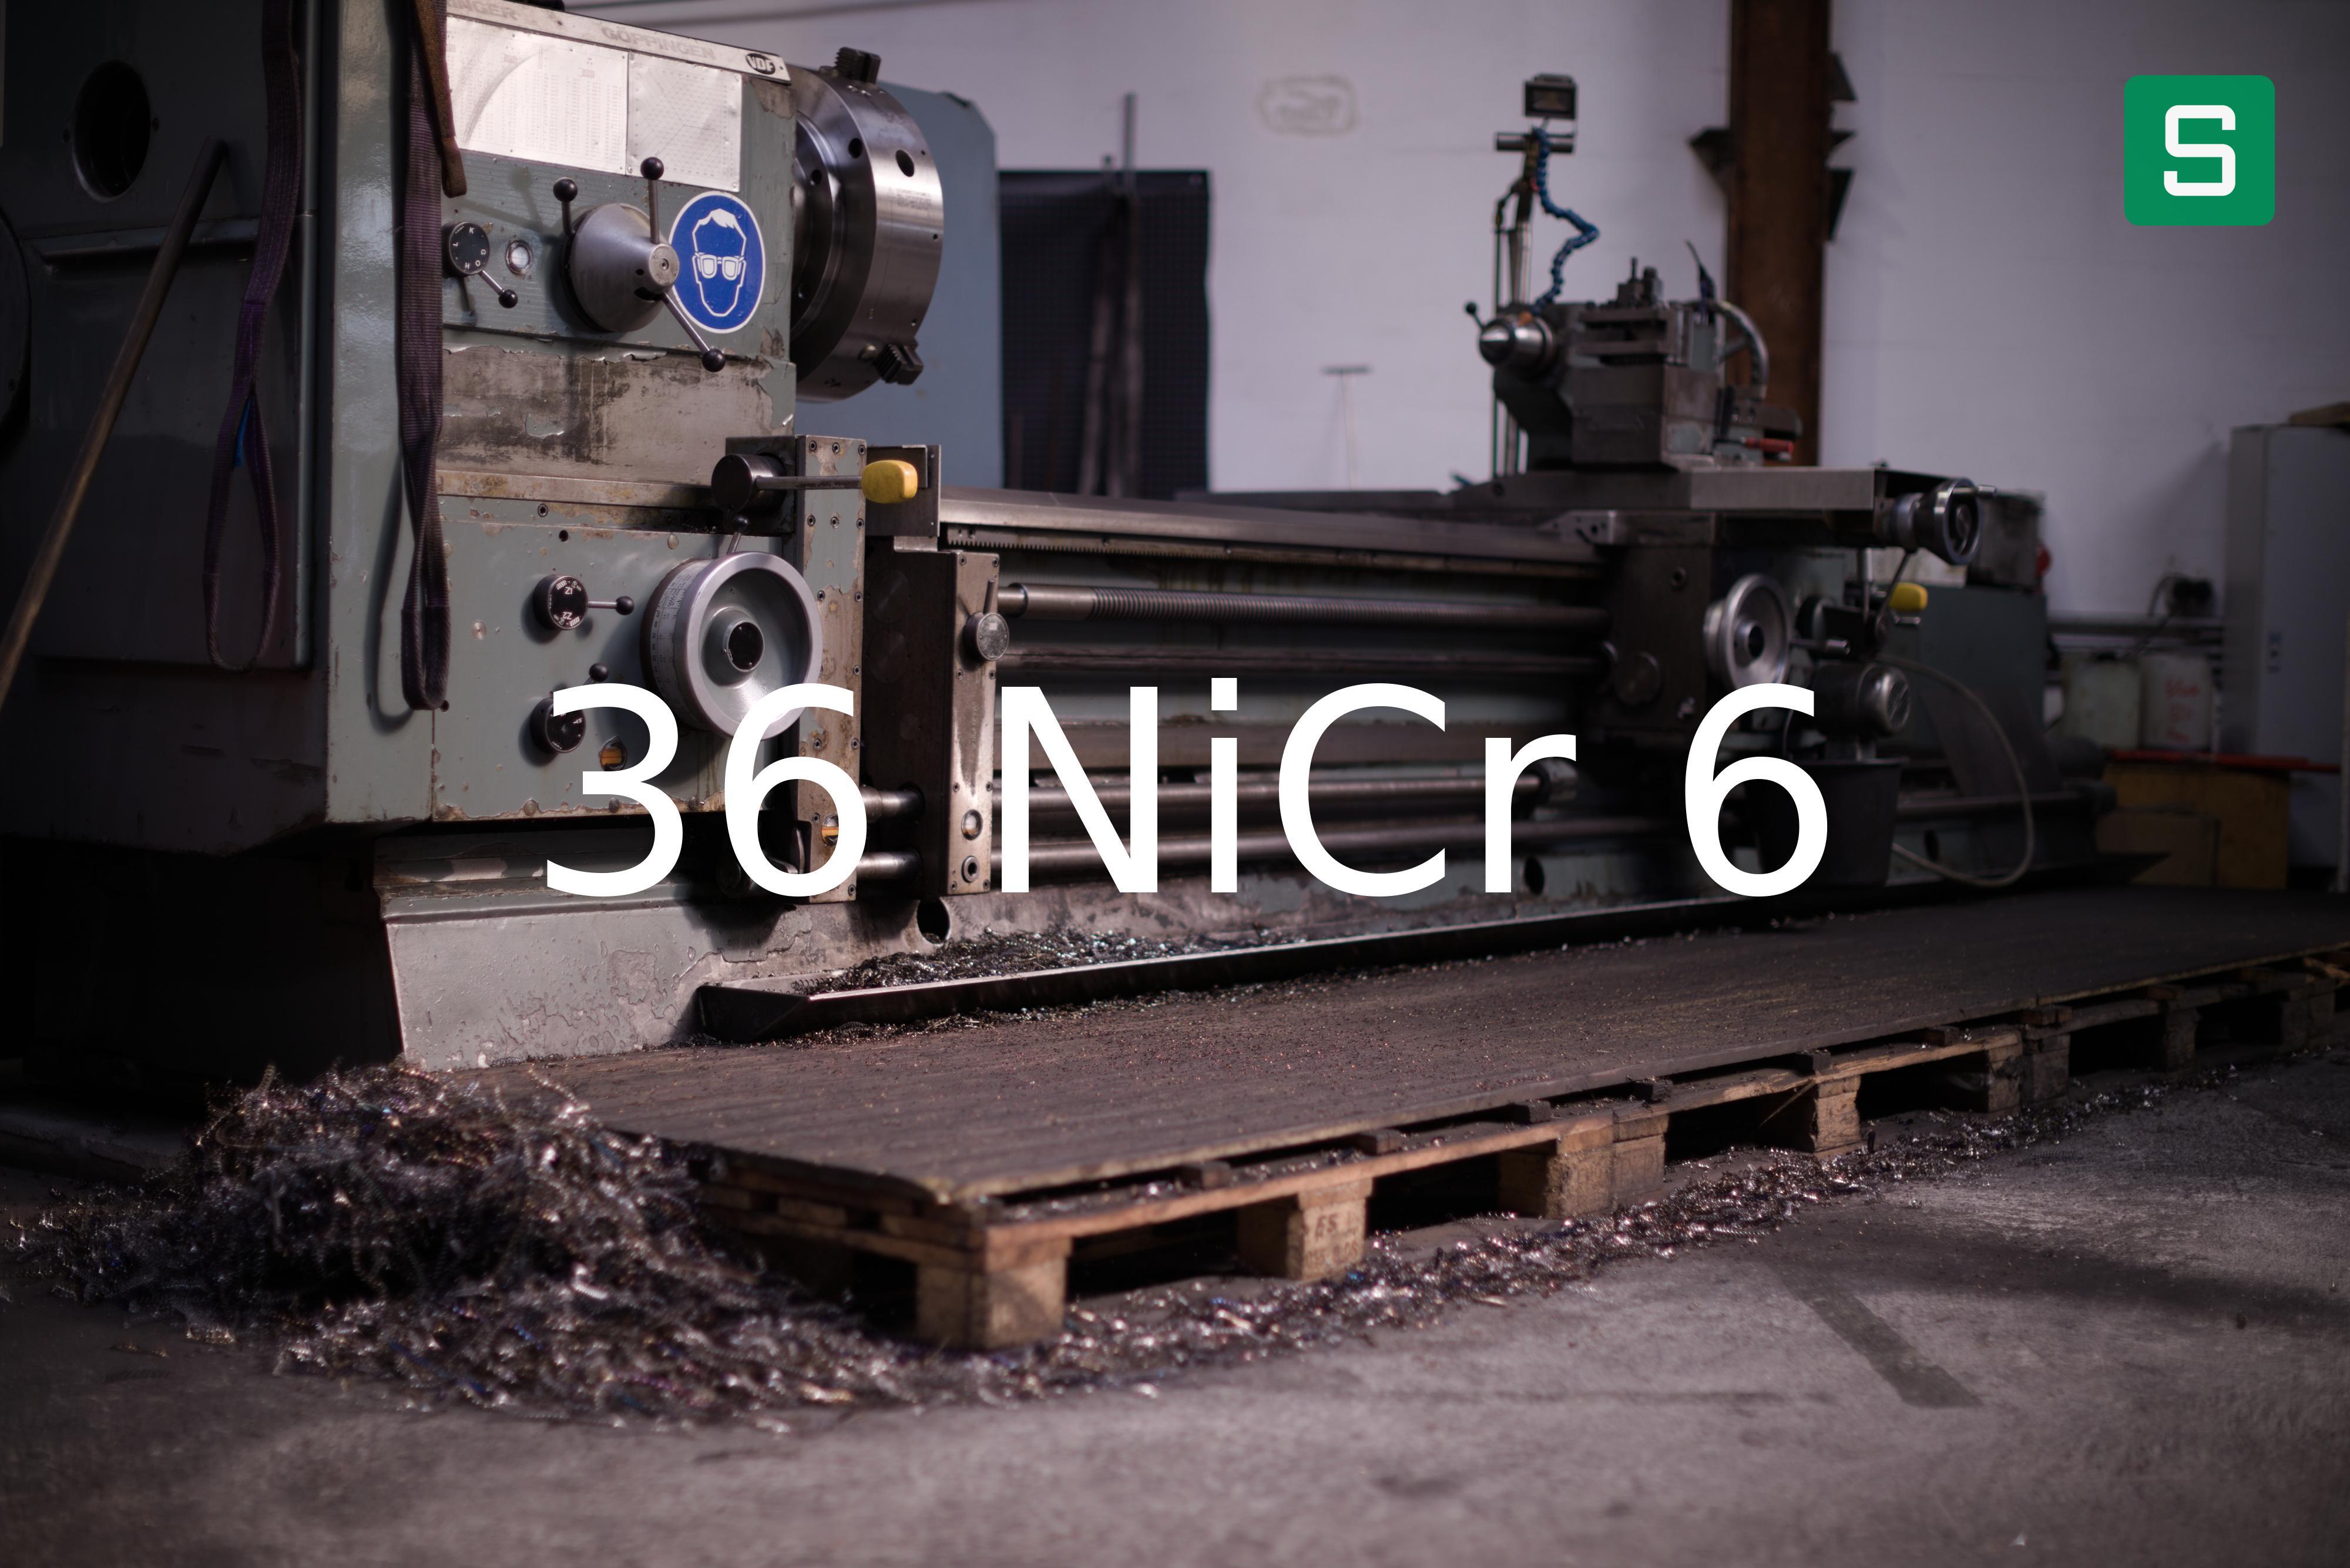 Steel Material: 36 NiCr 6